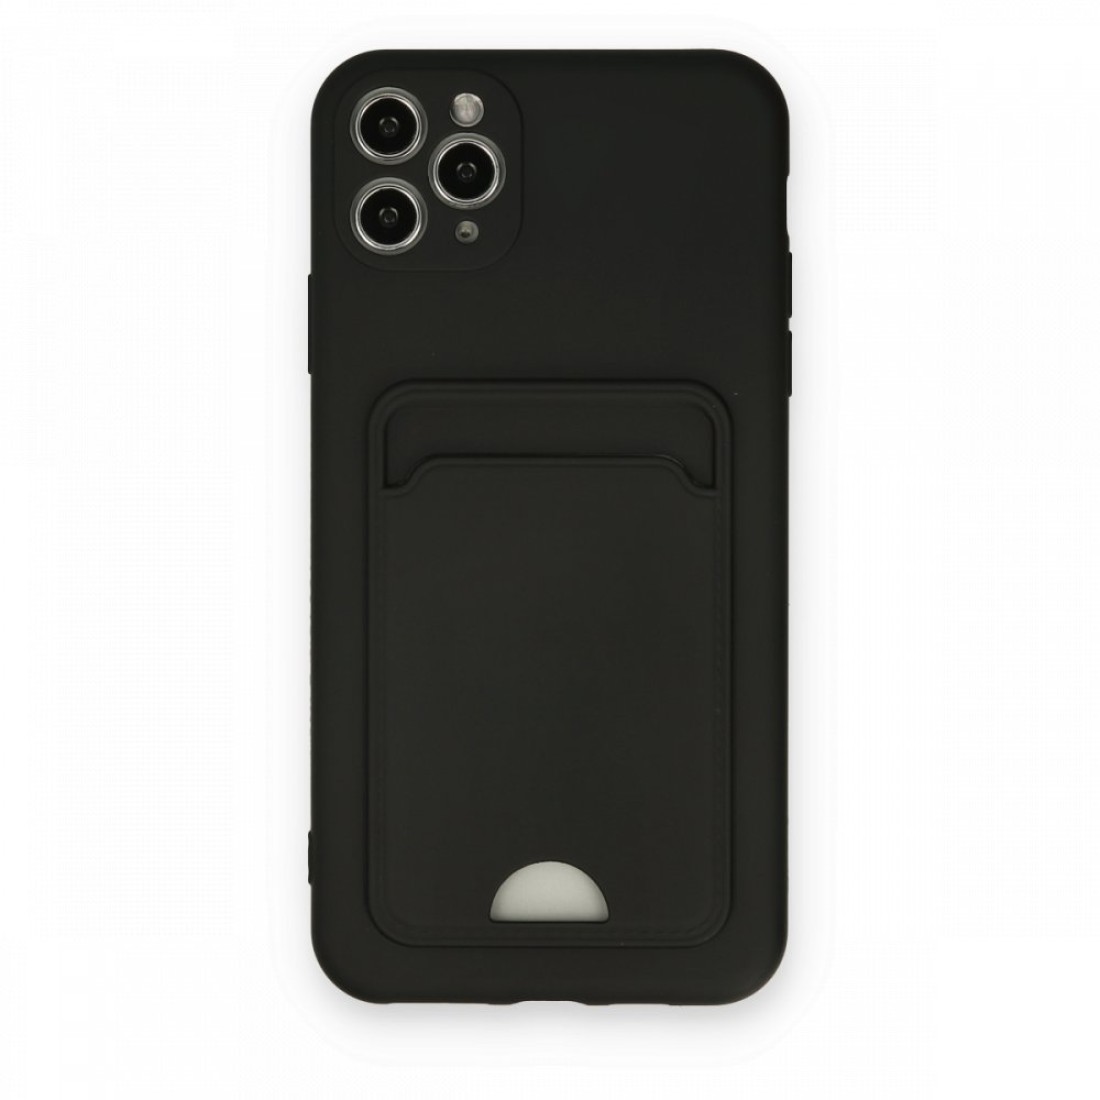 Apple iPhone 11 Pro Max Kılıf Kelvin Kartvizitli Silikon - Siyah